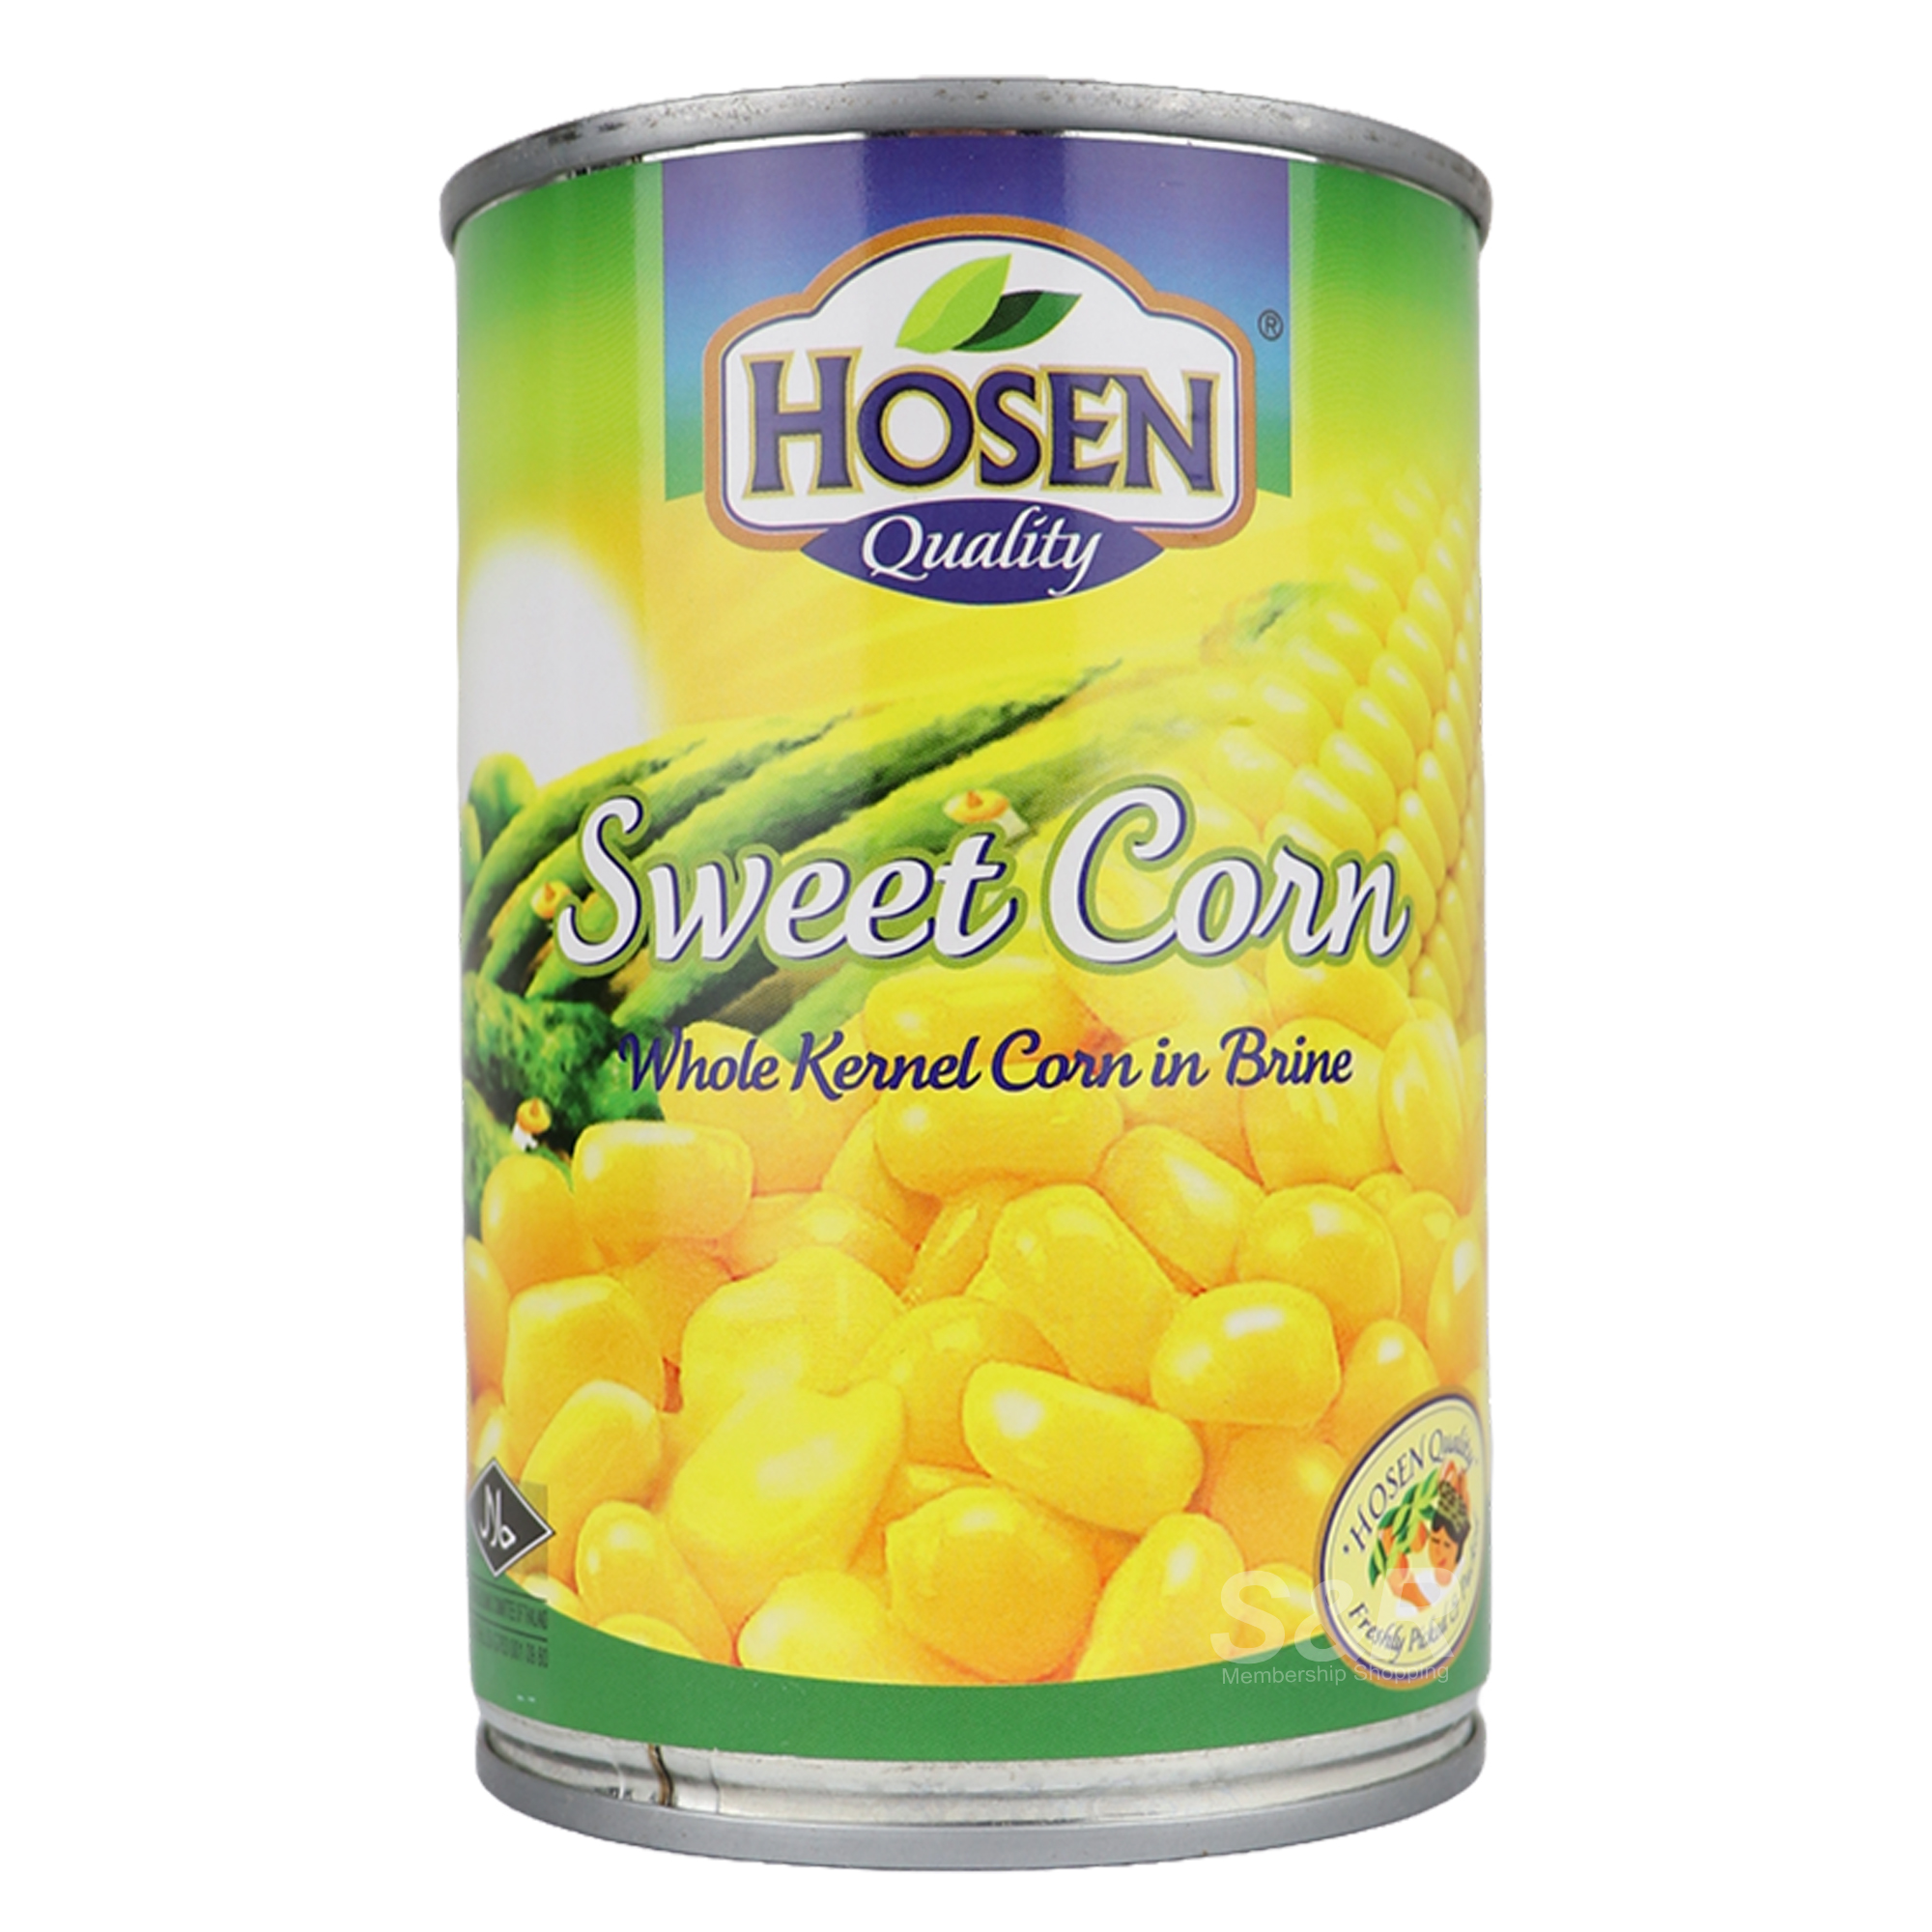 Hosen Quality Whole Sweet Kernel Corn in Brine 400g